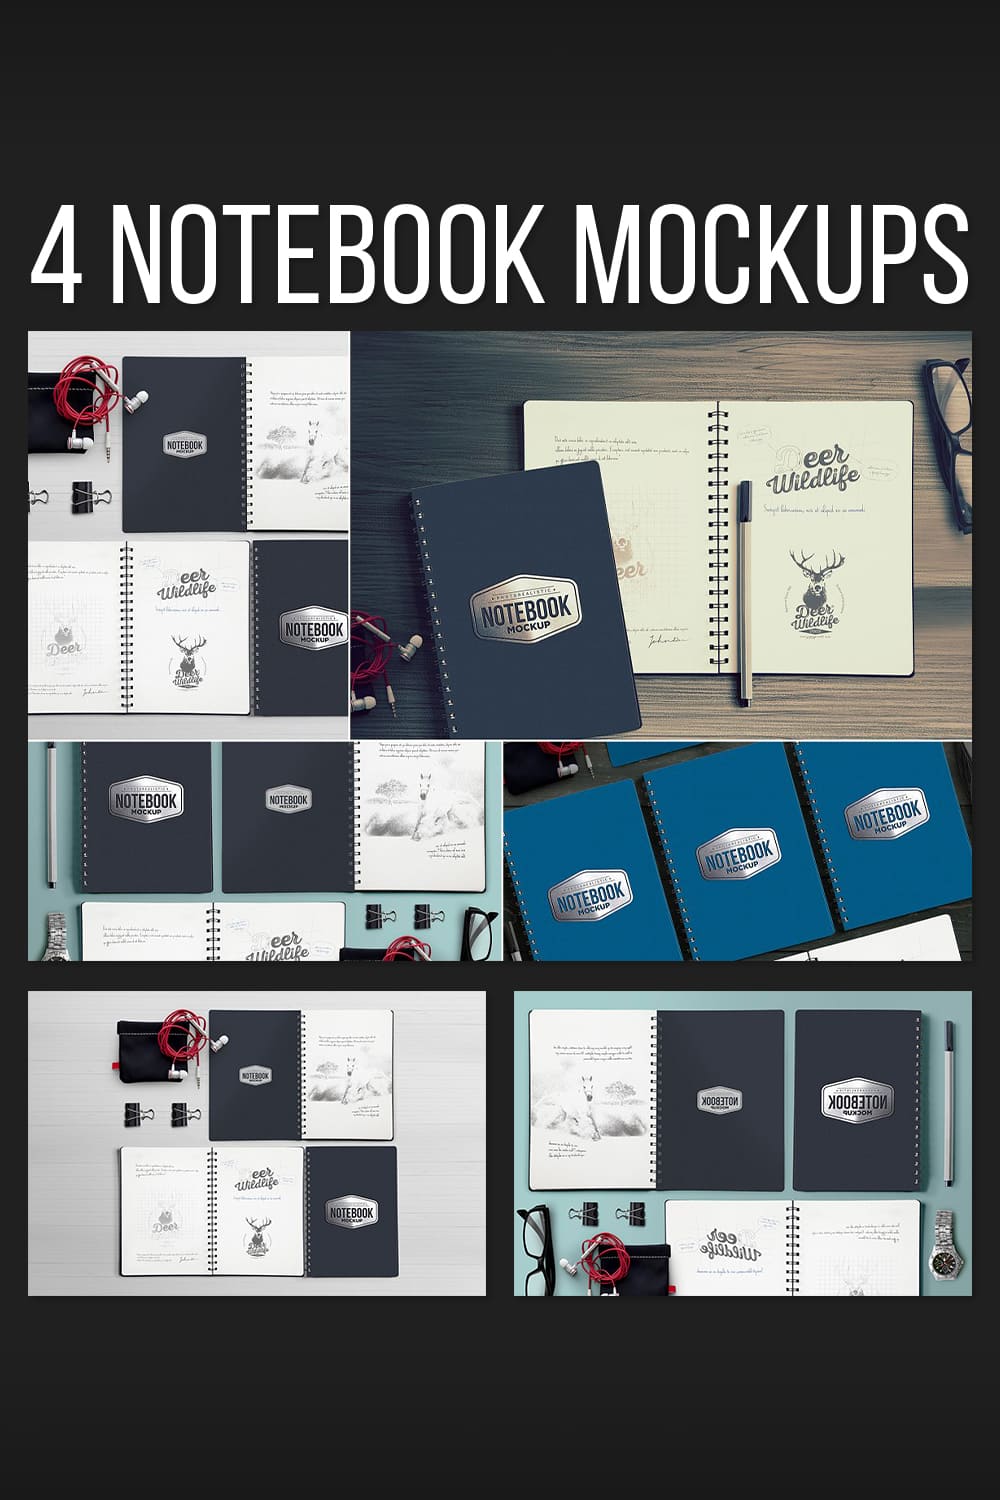 4 Notebook Mockups - Pinterest.